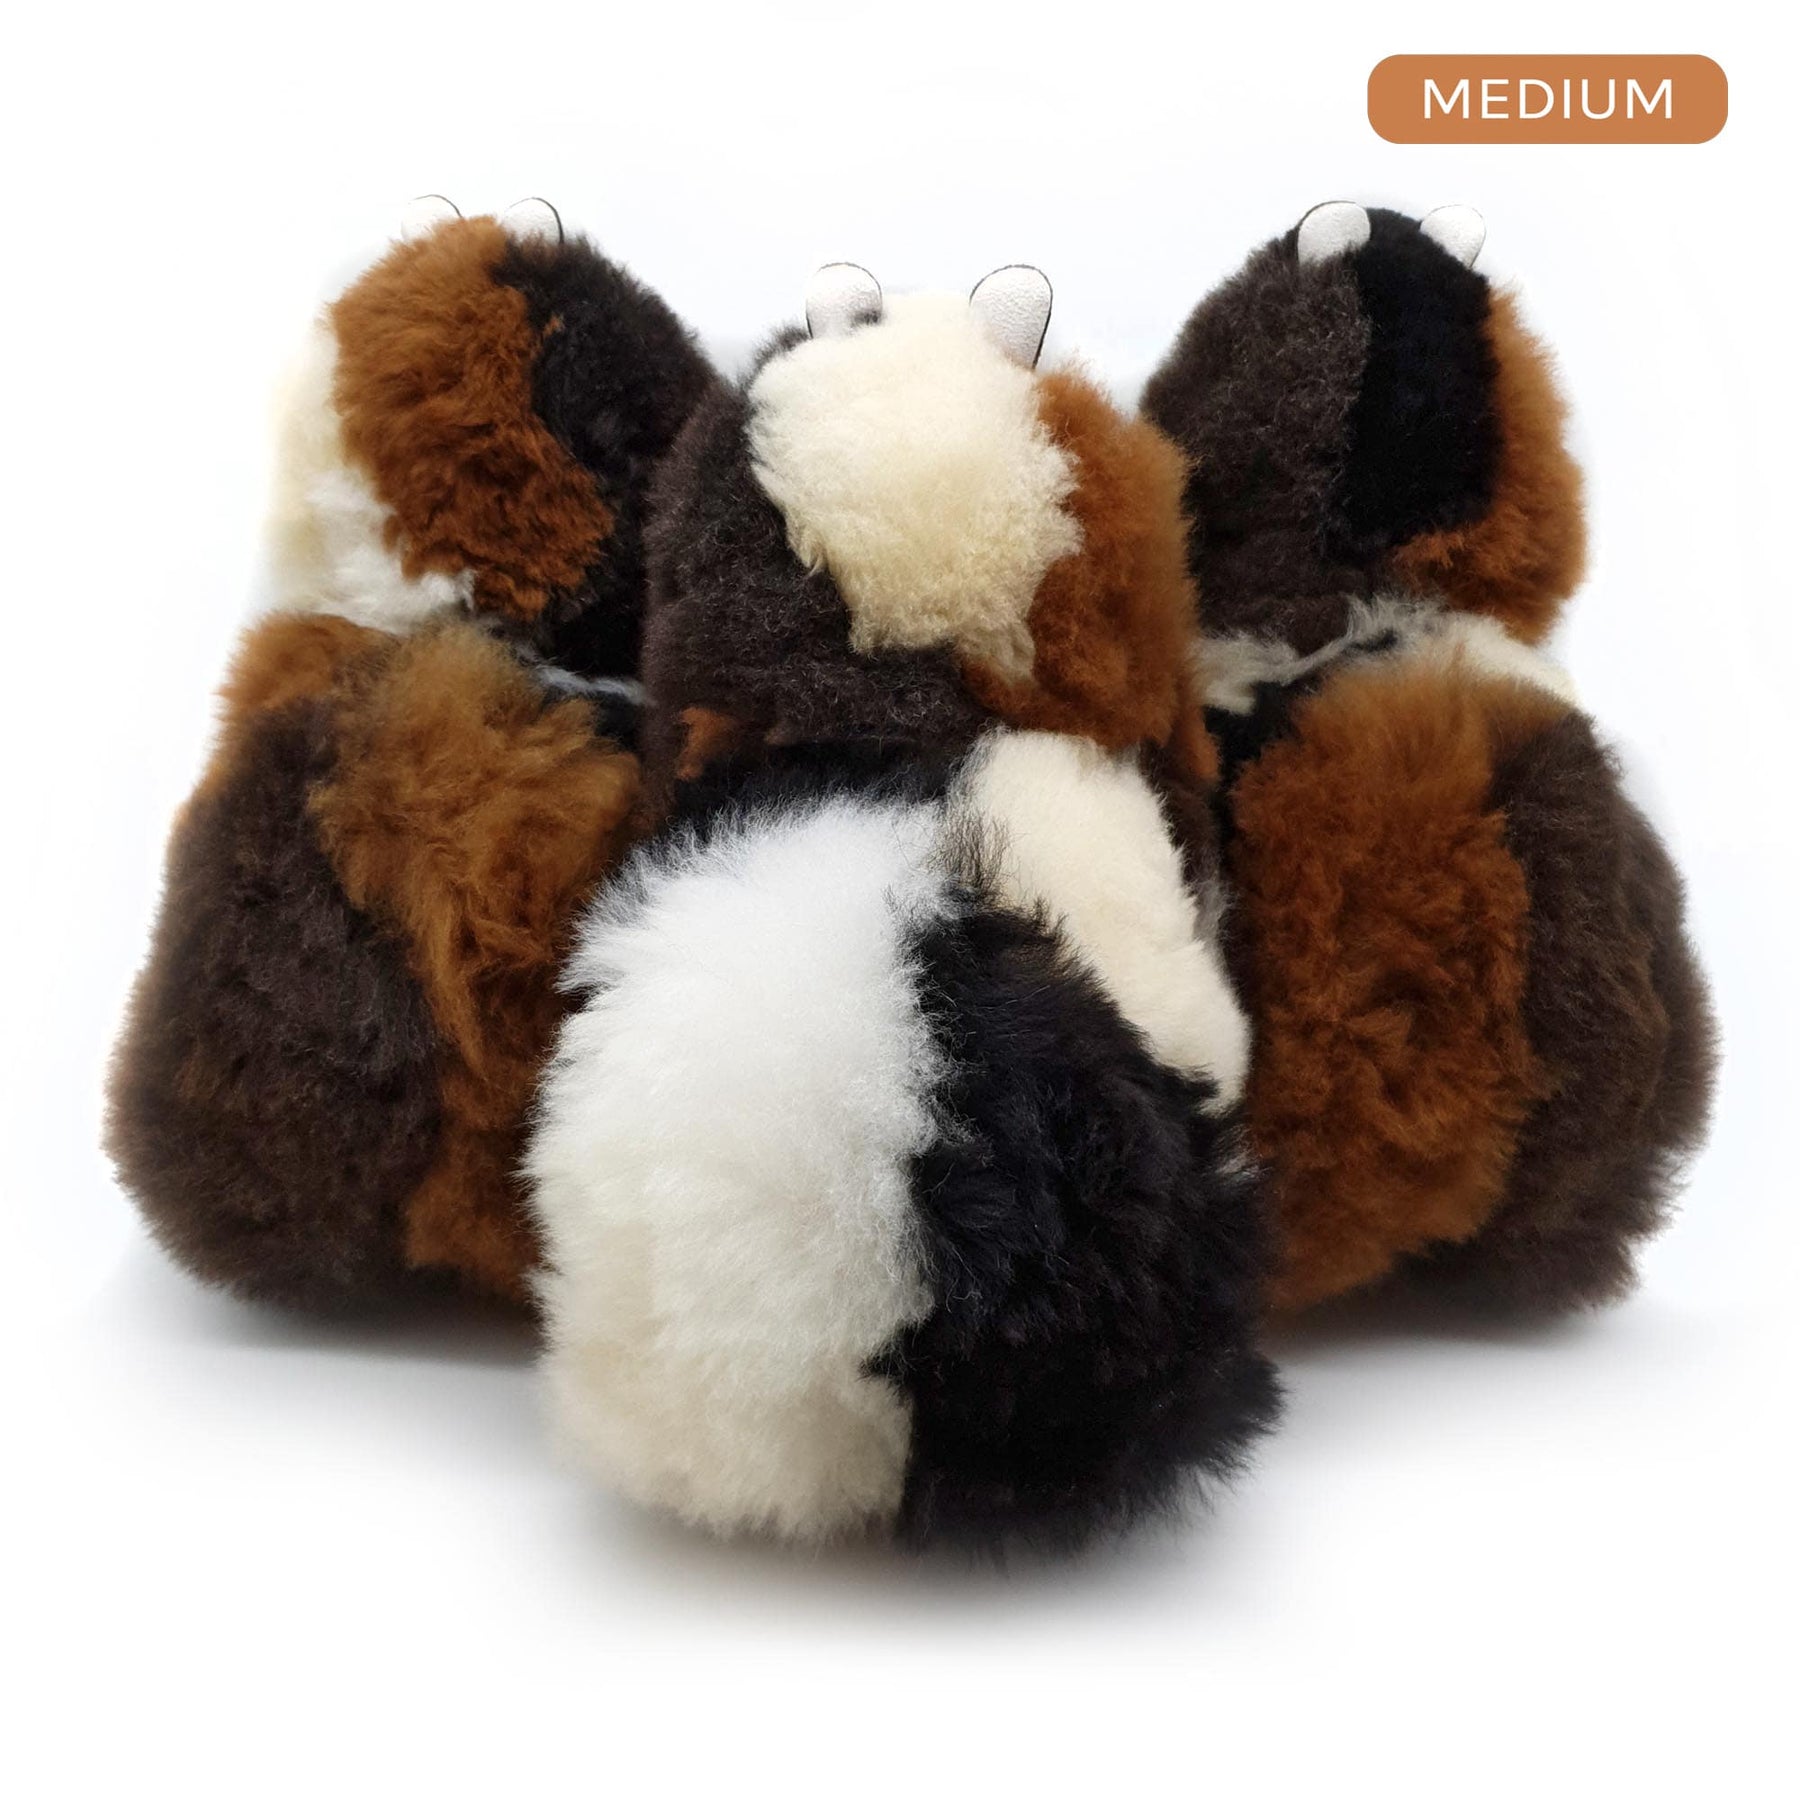 Calico - Medium Alpaca Toy (32cm) - Limited Edition